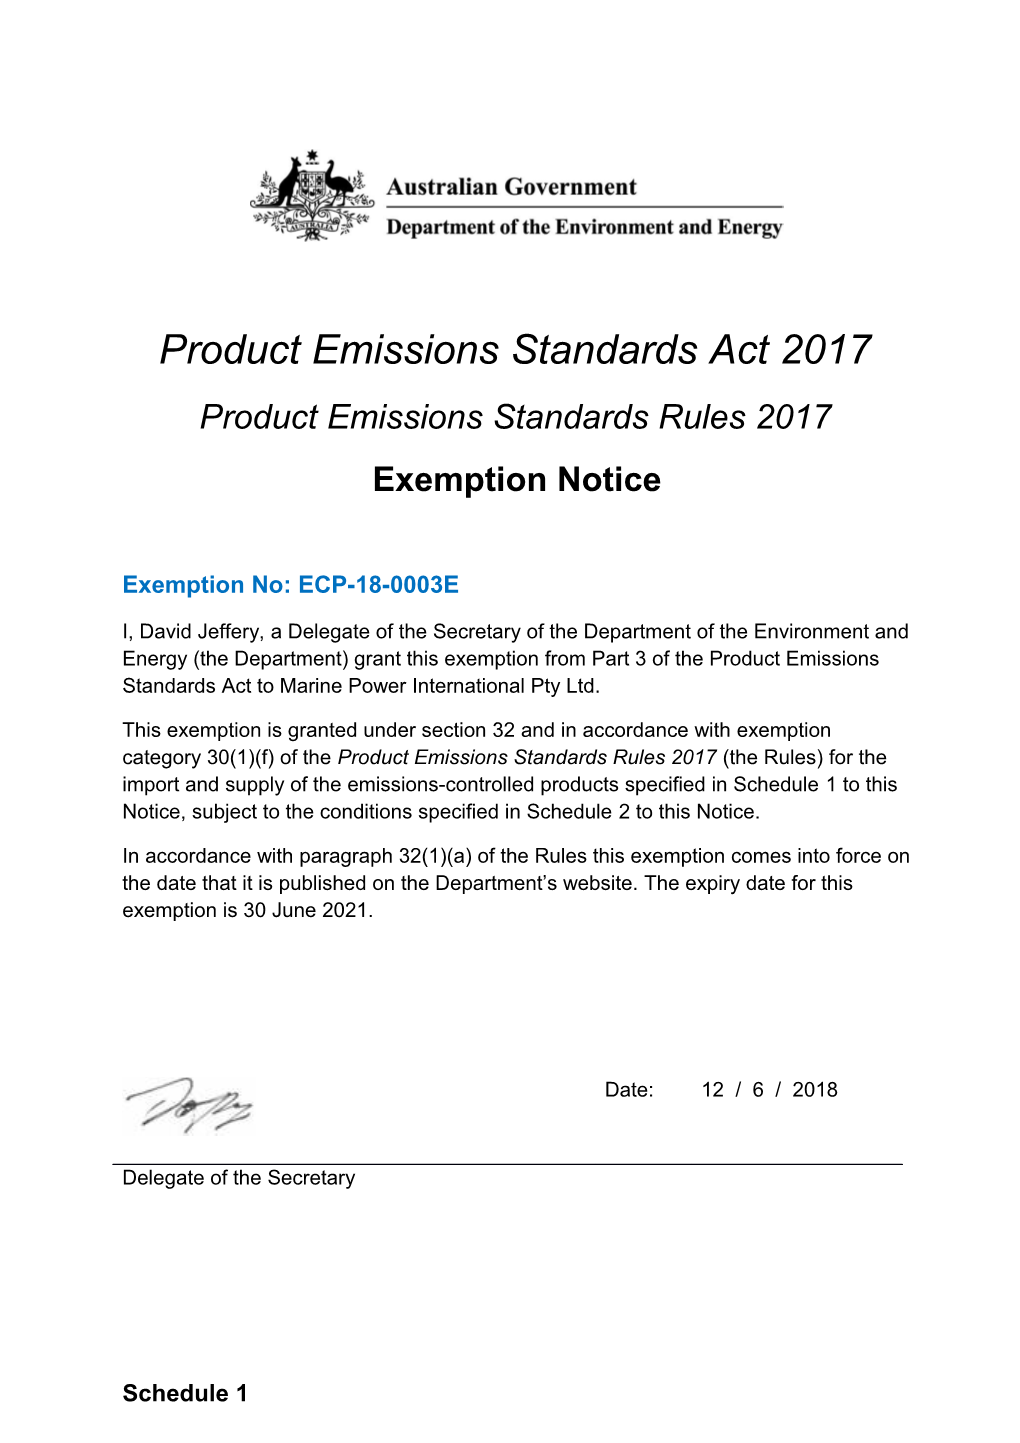 Exemption Certificate ECP-18-0003E (Marine Power International)